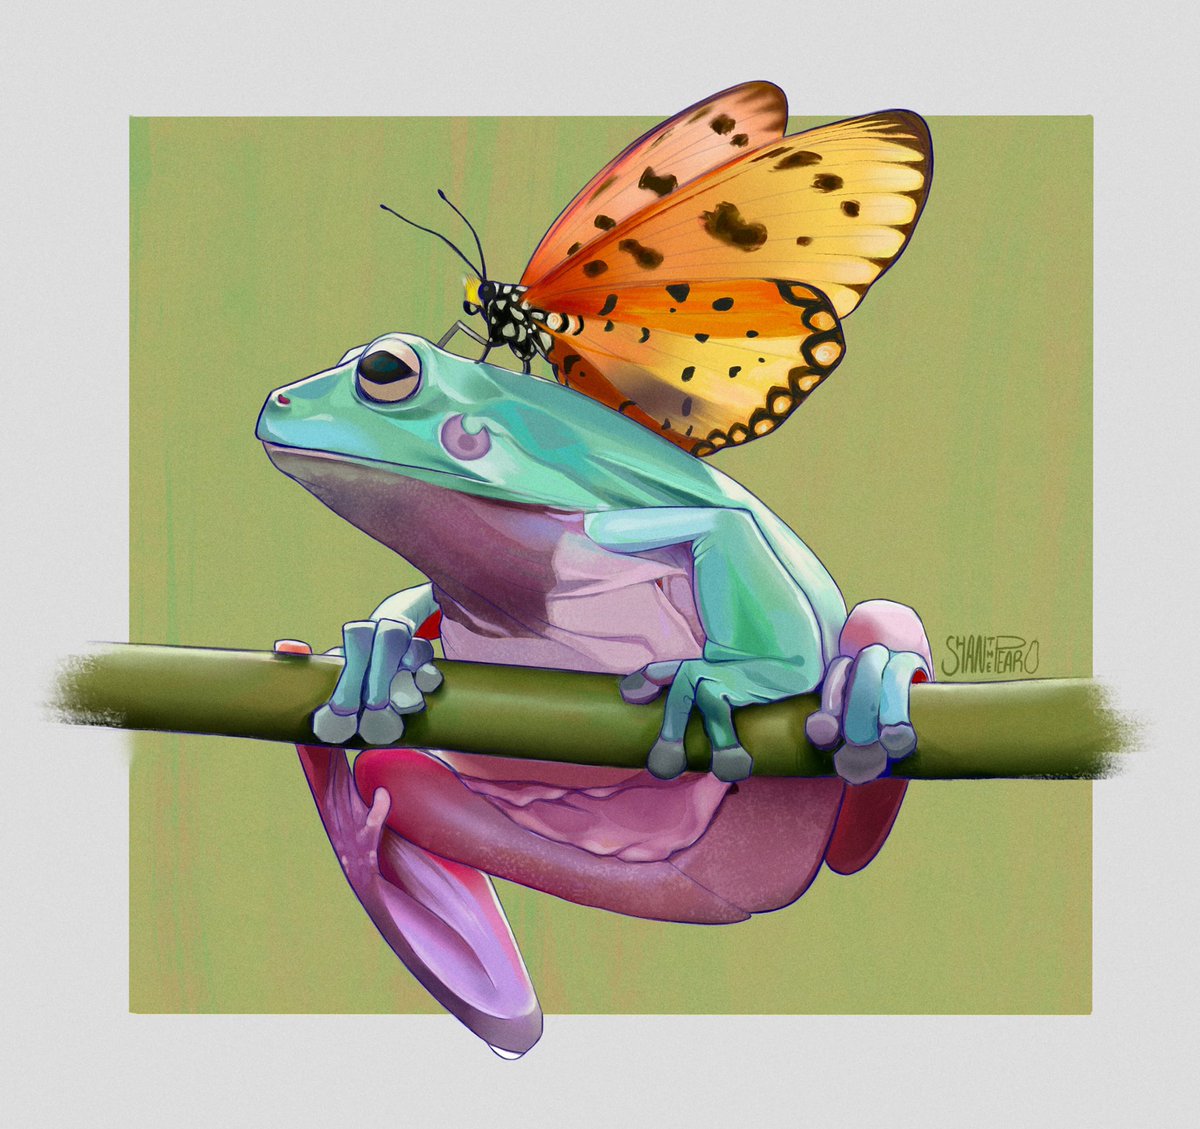 Frog fairy photo study🐸 
#study #procreate #natureartist